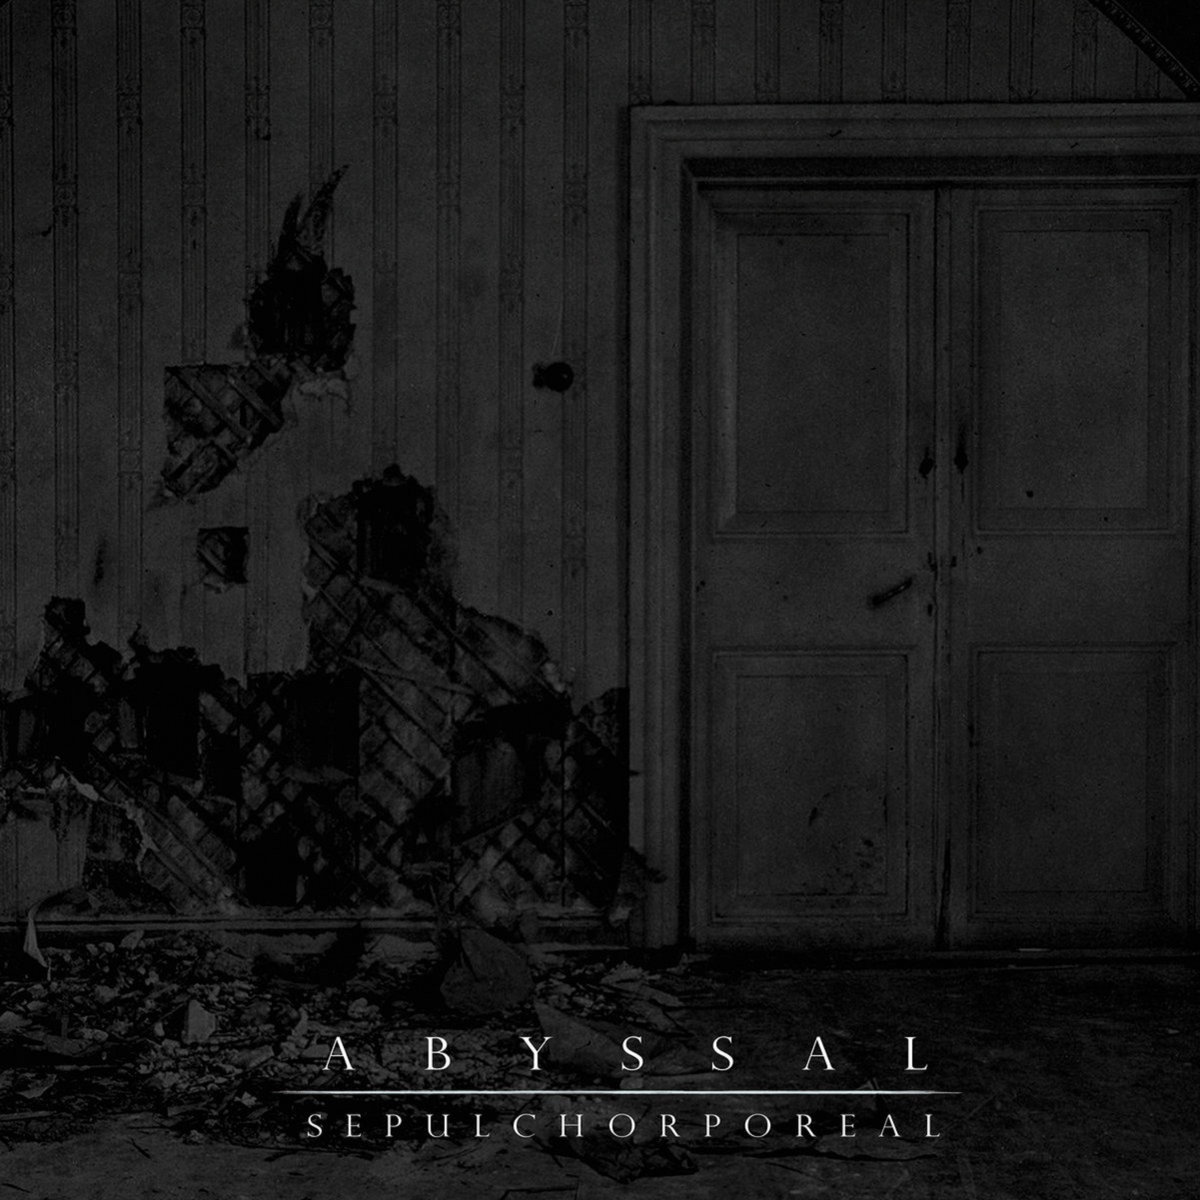 Sepulchorporeal / Amore | Abyssal / Ellorsith | Dark Descent Records